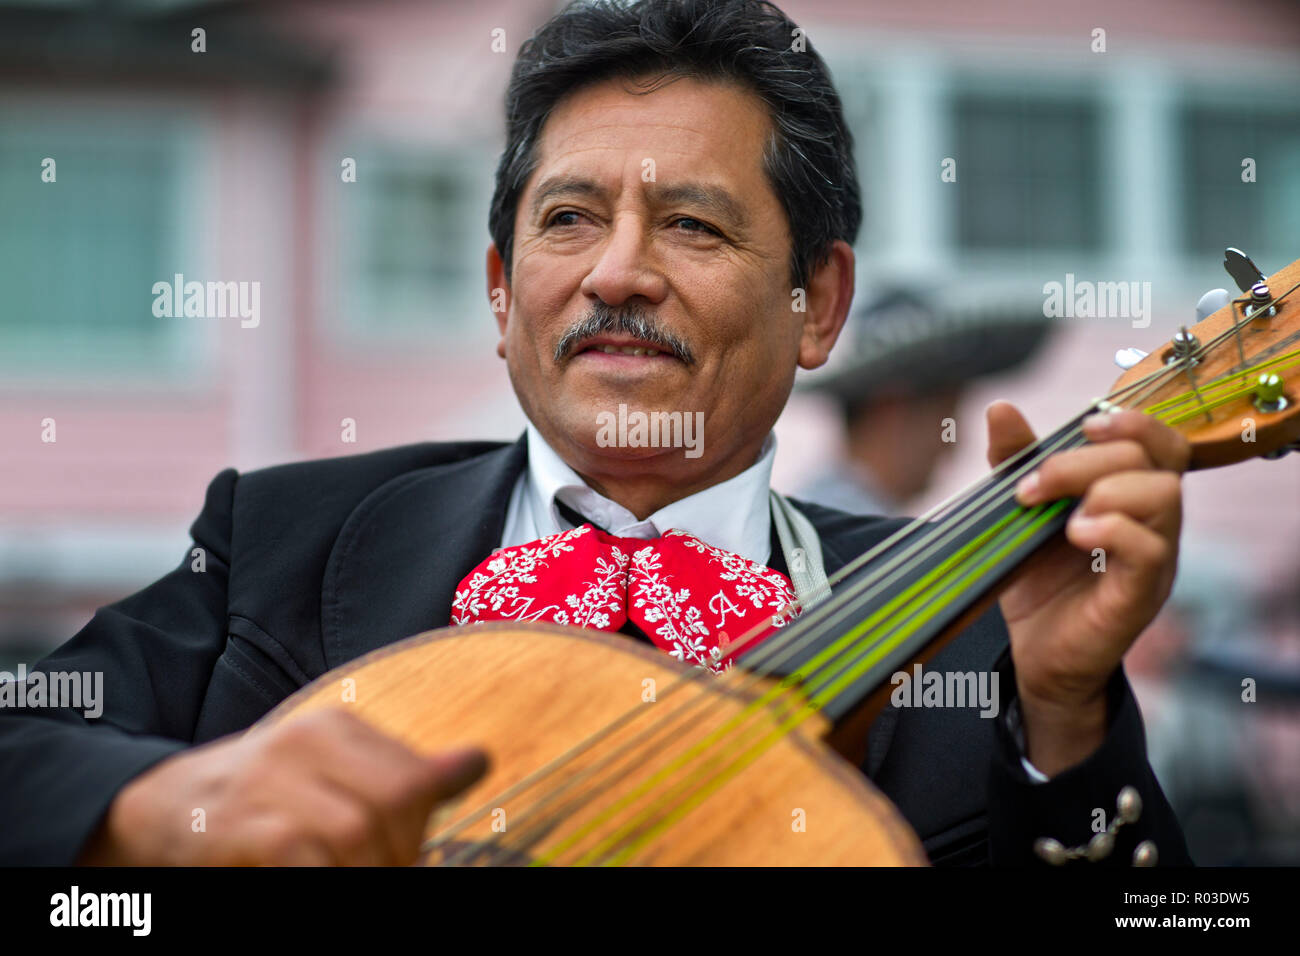 Mariachi musician playing guitar Stock Photo - Alamy